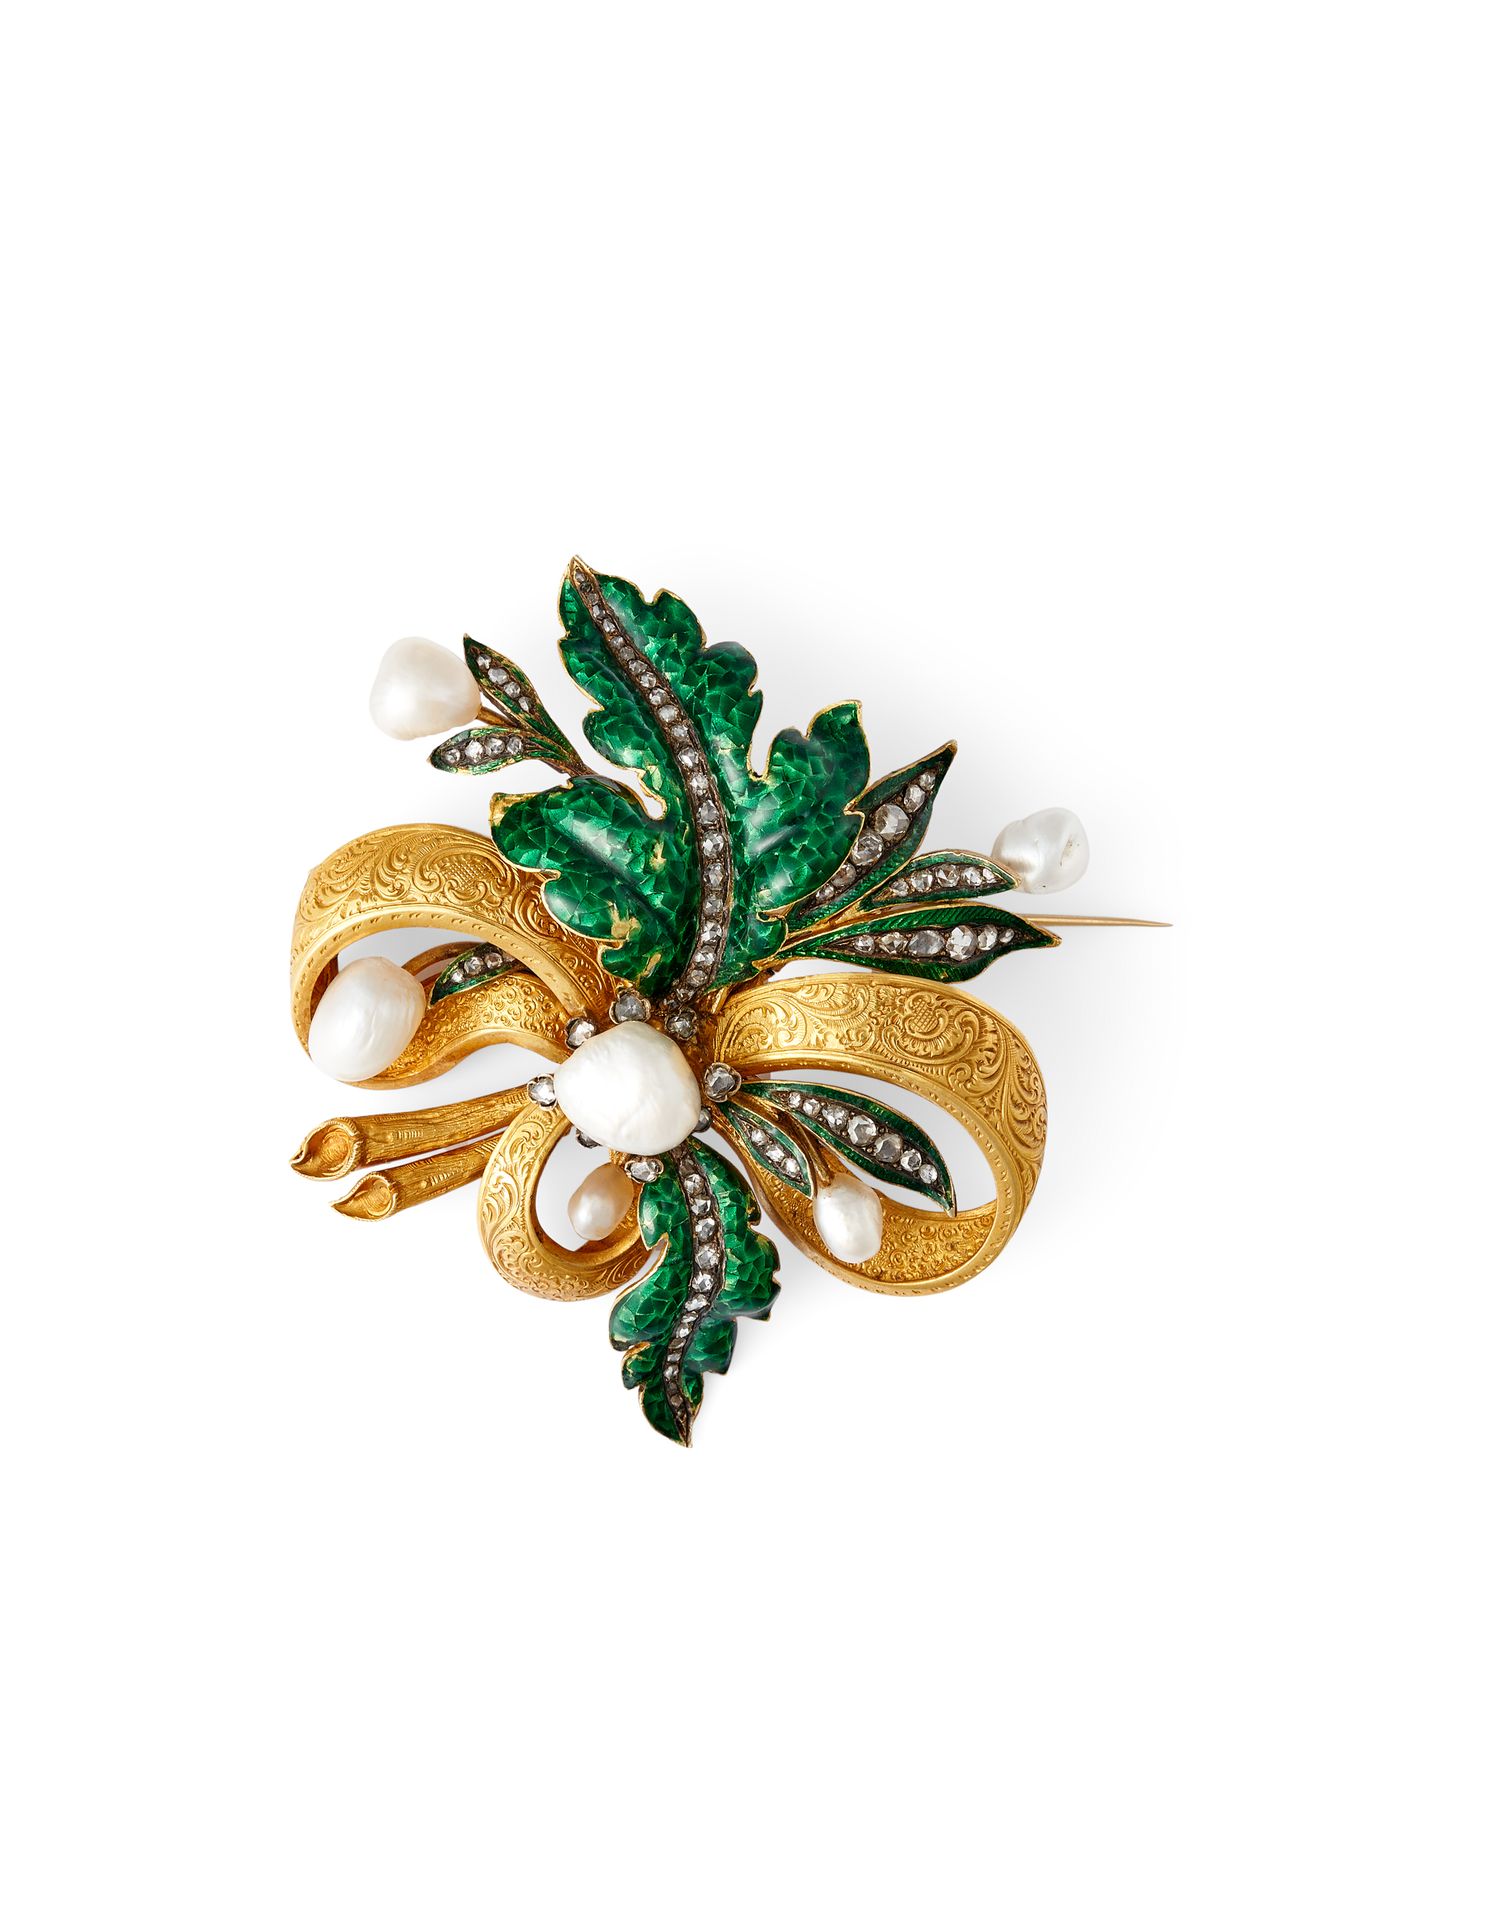 Null LEOPOLD I国王赠予的珐琅彩花纹手镯 18K黄金，绿色珐琅彩花纹，镶有6颗巴洛克珍珠（可能是天然的）和玫瑰切割钻石。原装在印有IM的盒子里，上面&hellip;